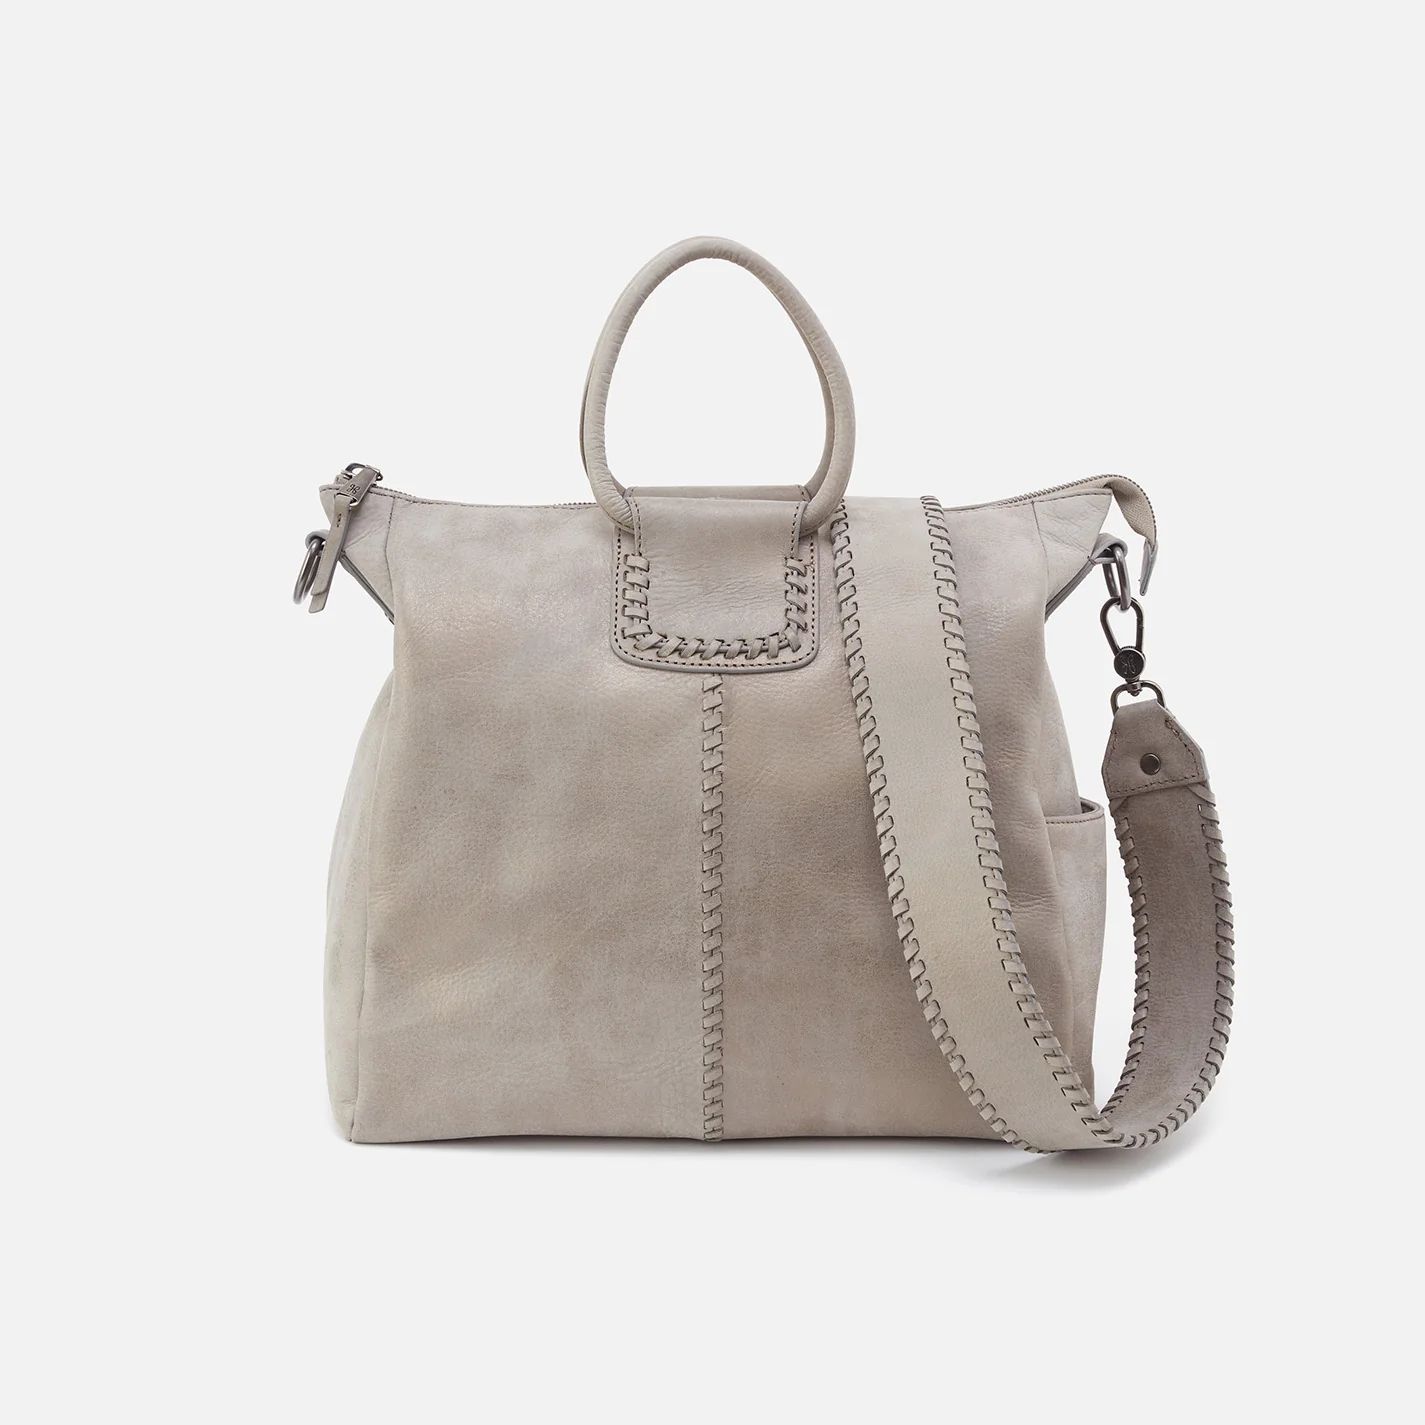 Sheila Large Satchel in Metallic Leather - Granite Grey | HOBO Bags